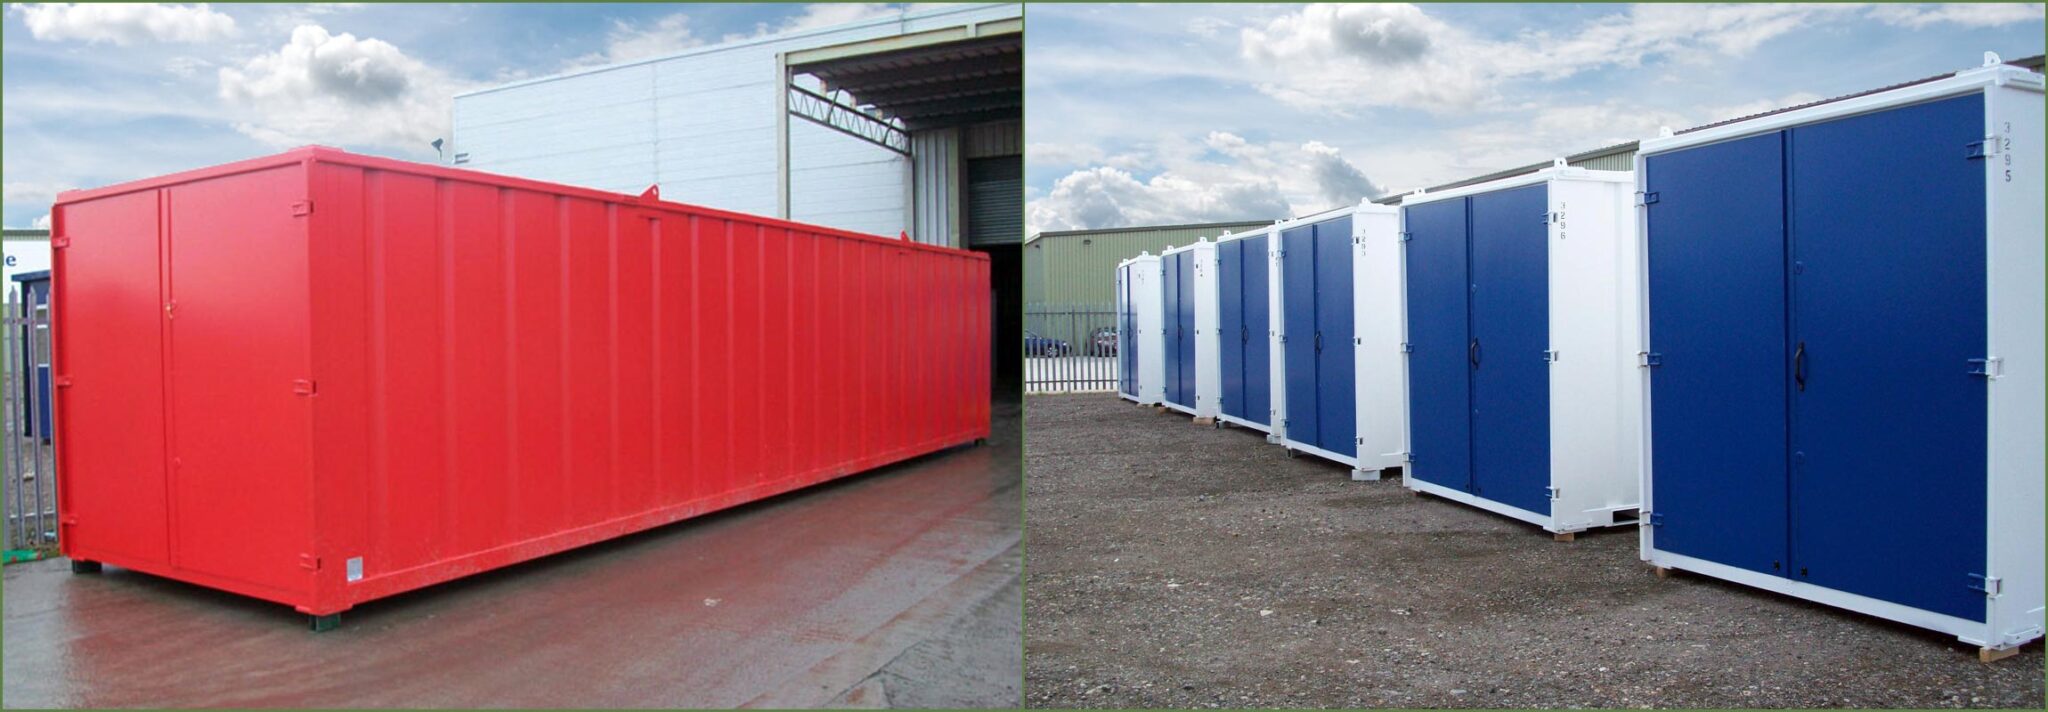 UK Suppliers of Anti-Vandal Storage Units